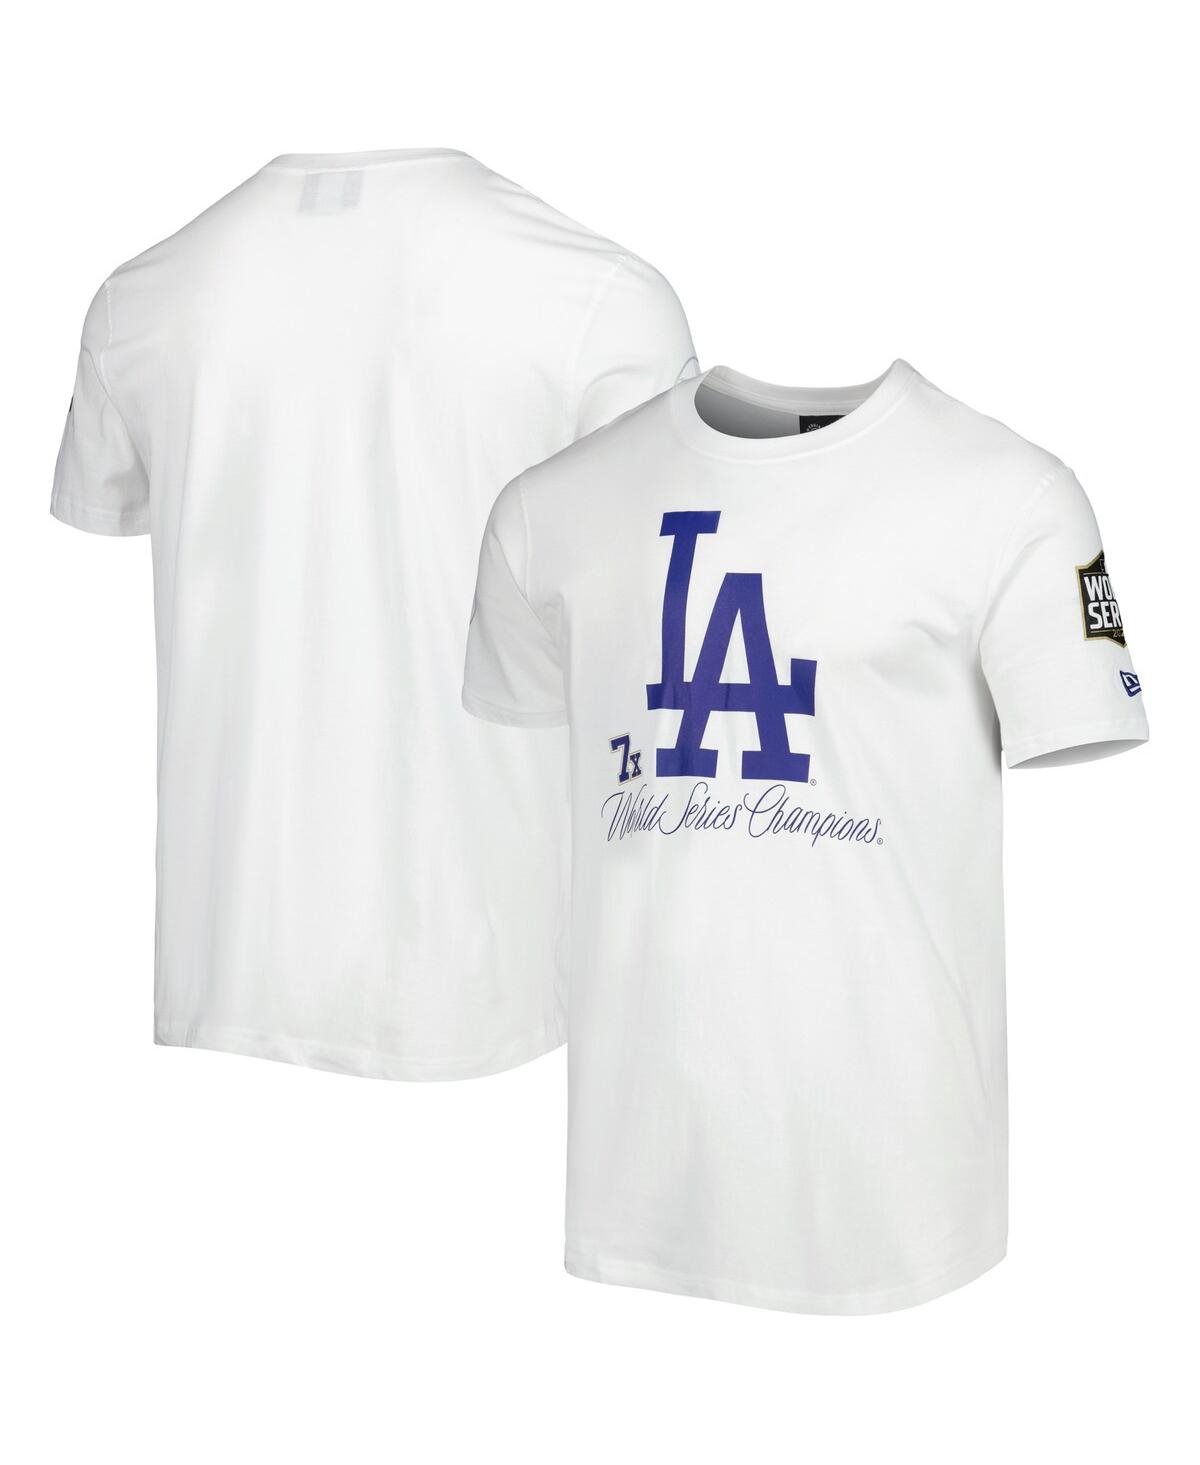 Shop New Era Men's  White Los Angeles Dodgers Historical Championship T-shirt